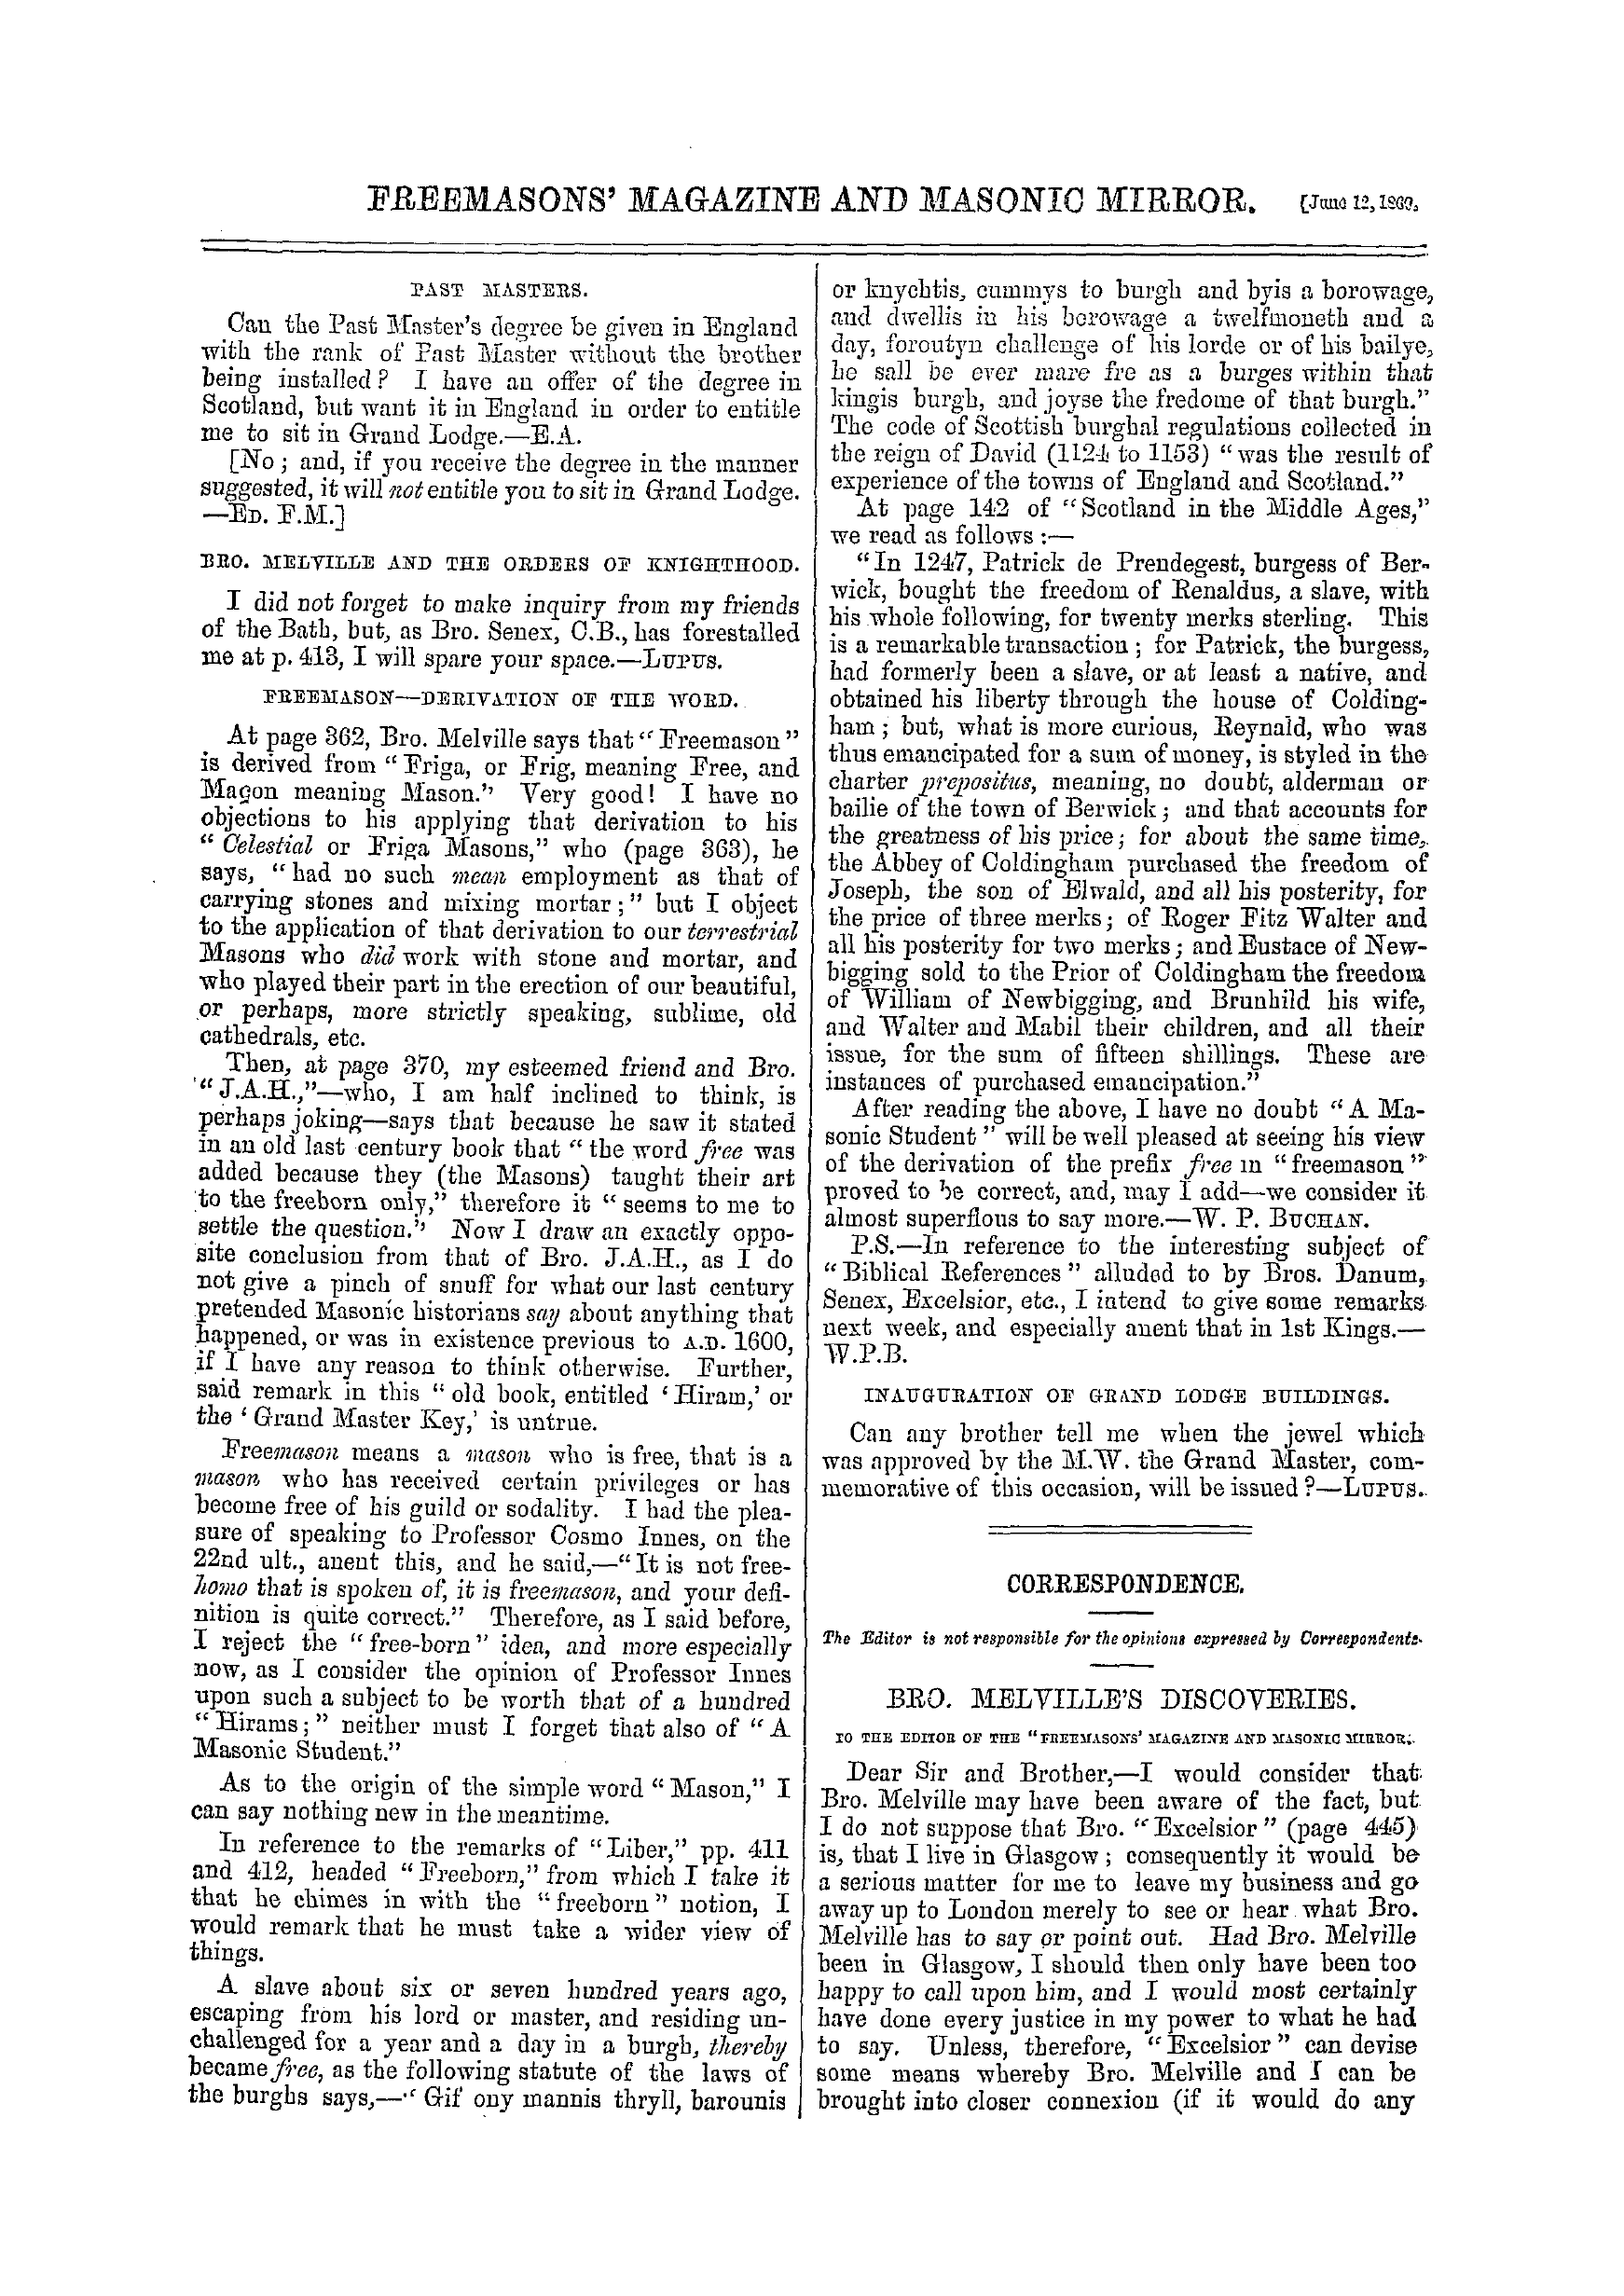 The Freemasons' Monthly Magazine: 1869-06-12 - Correspondence.